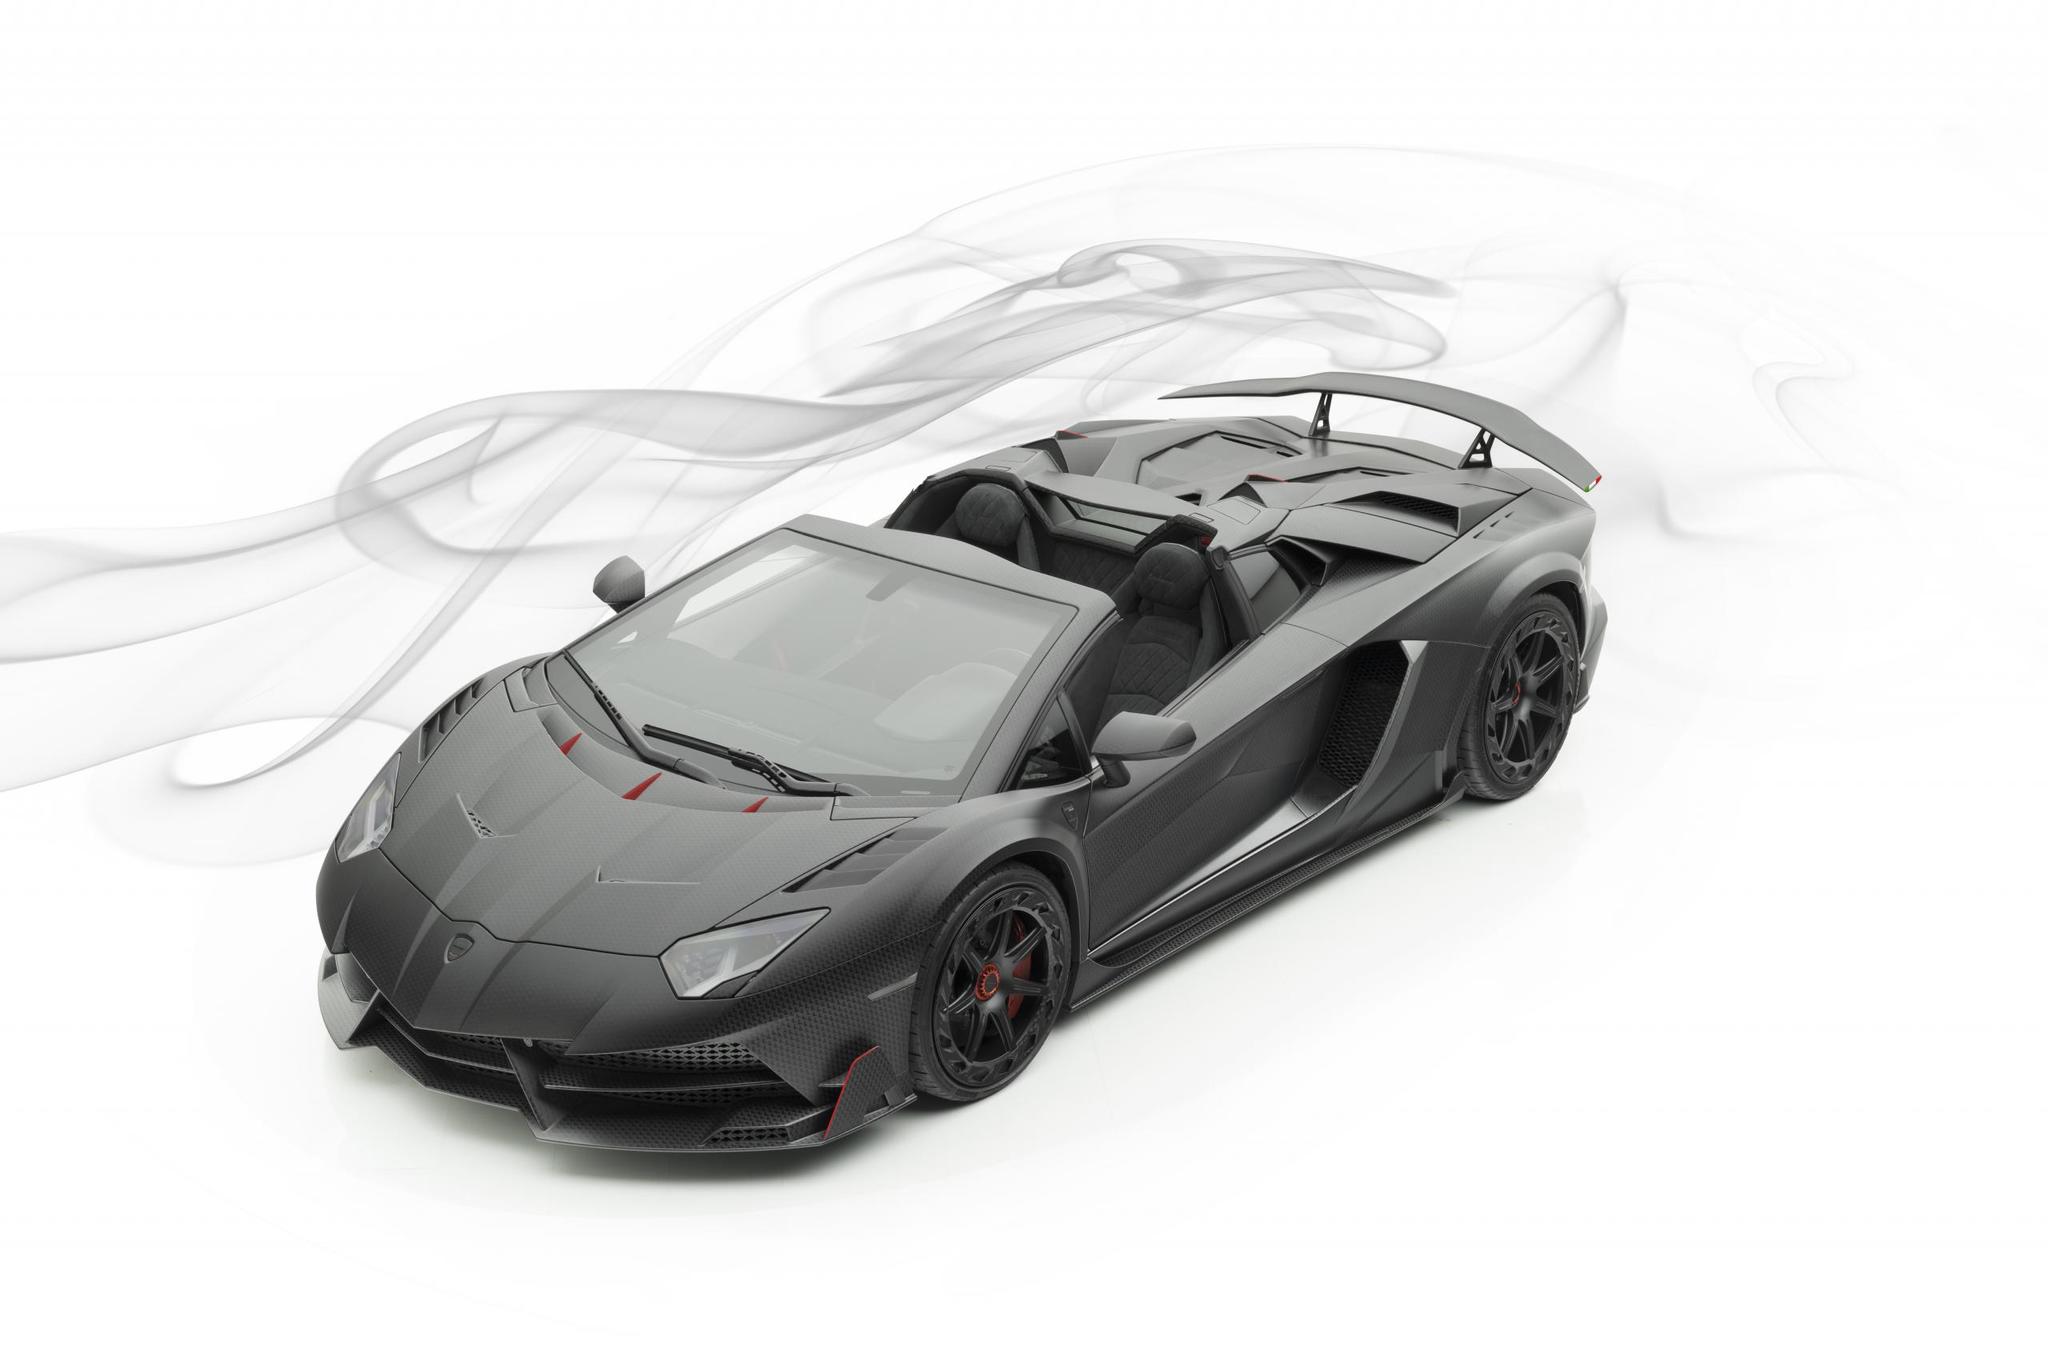 Mansory body kit for Lamborghini Aventador Carbonado new model